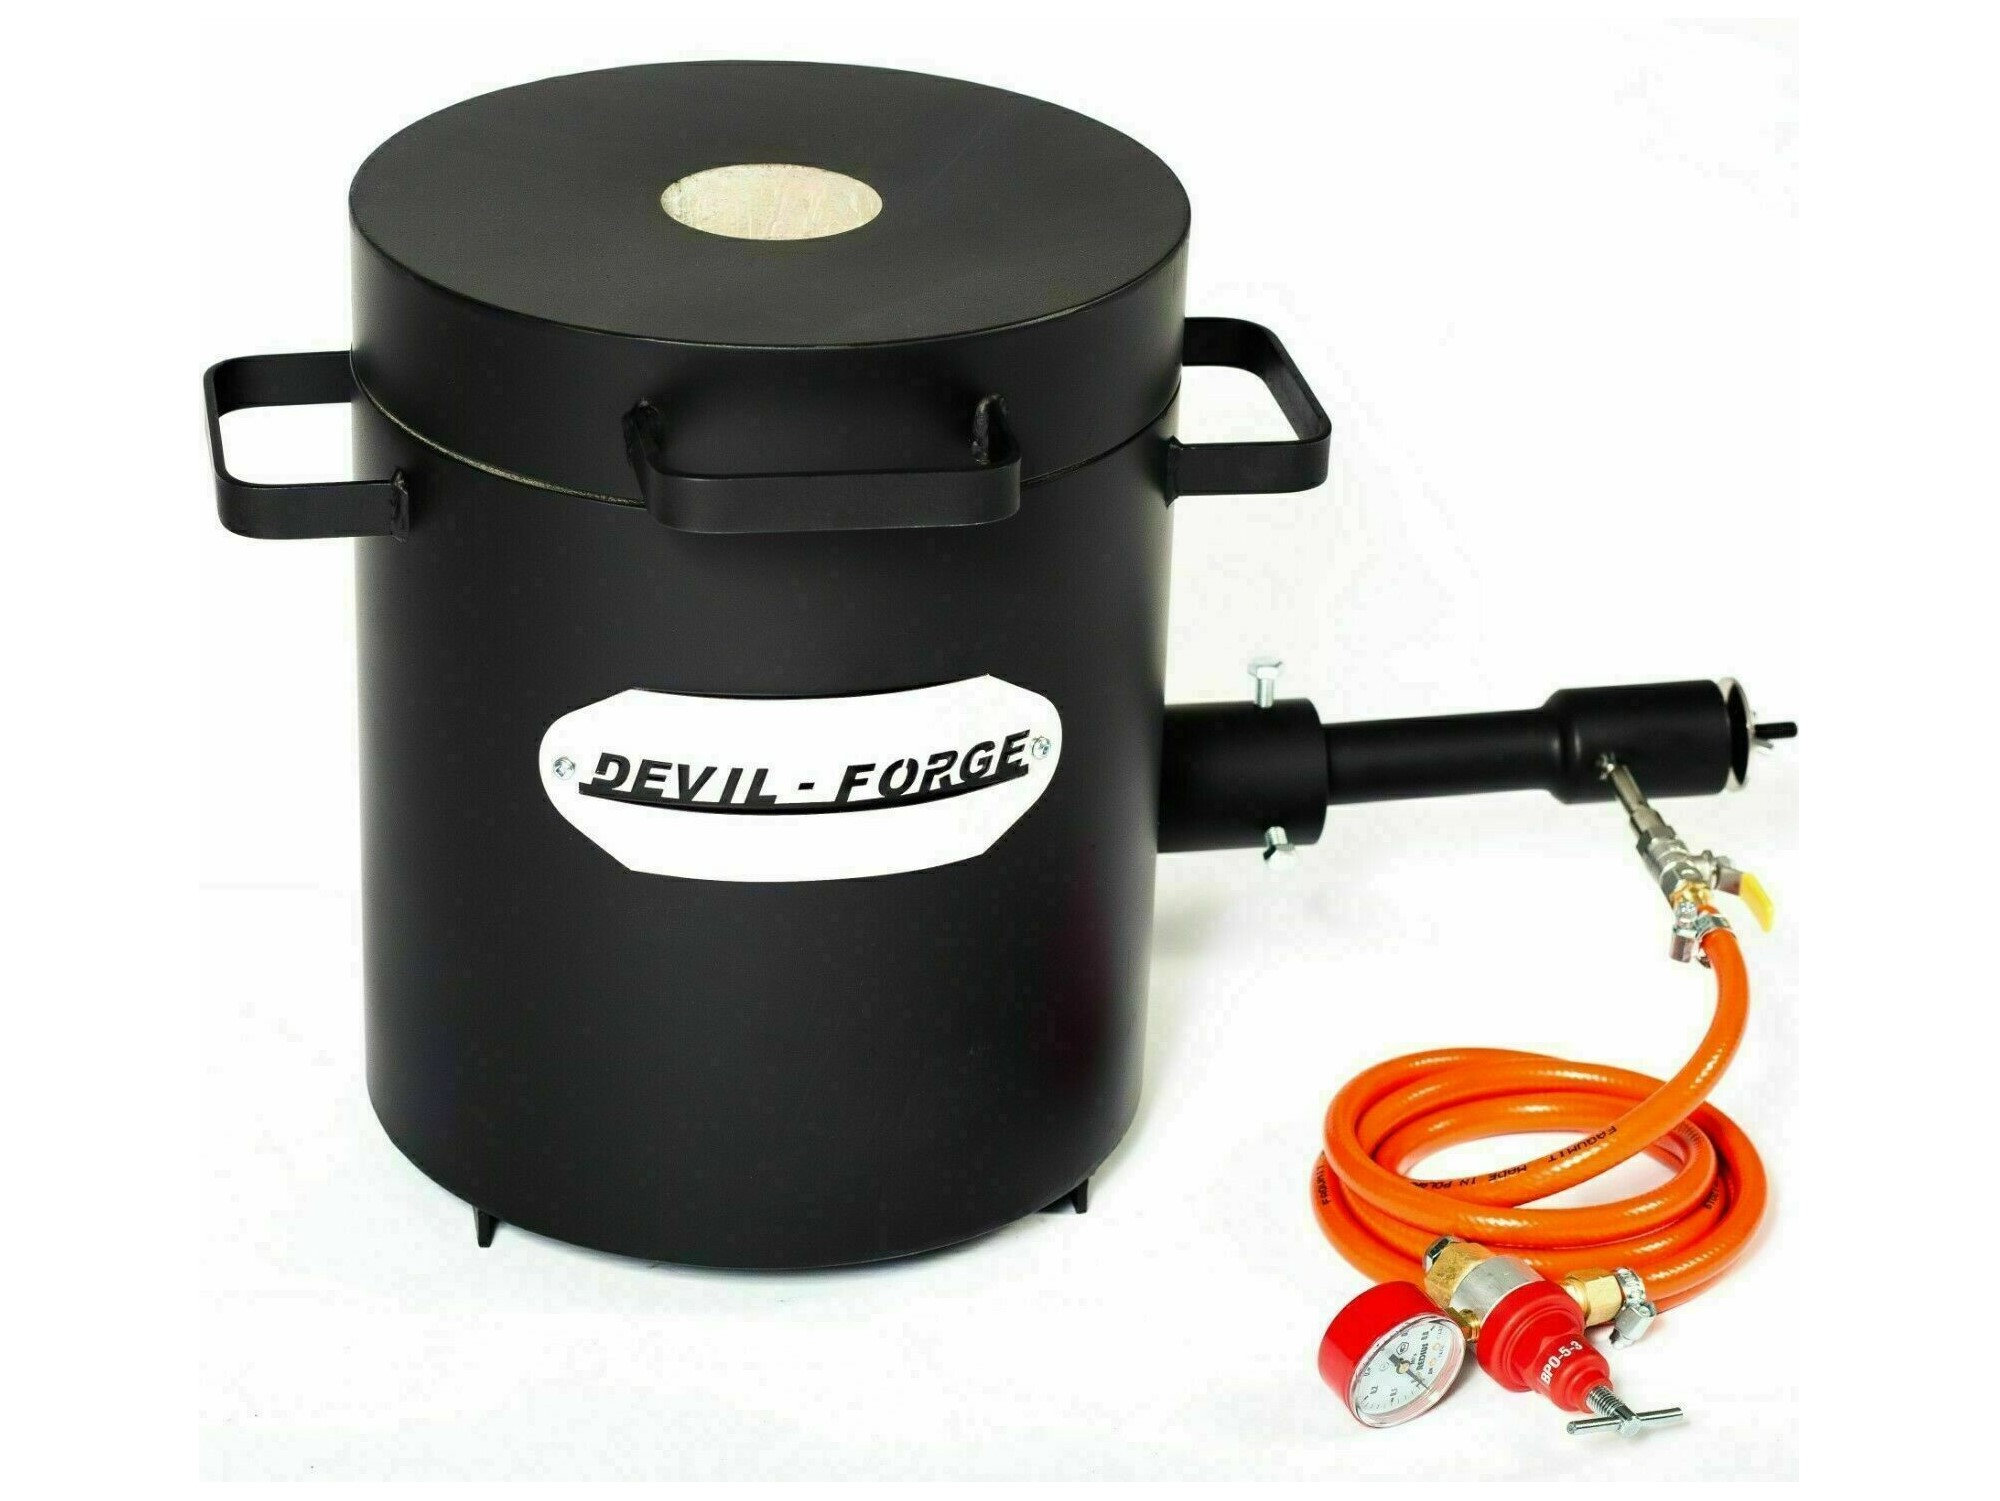 DEVIL-FORGE Gas Burner DF-AIR-Forced (308.000 BTU) for Large Propane Forge  Furnace Foundry Raku Kiln Blacksmith Farrier Knife, Professiona